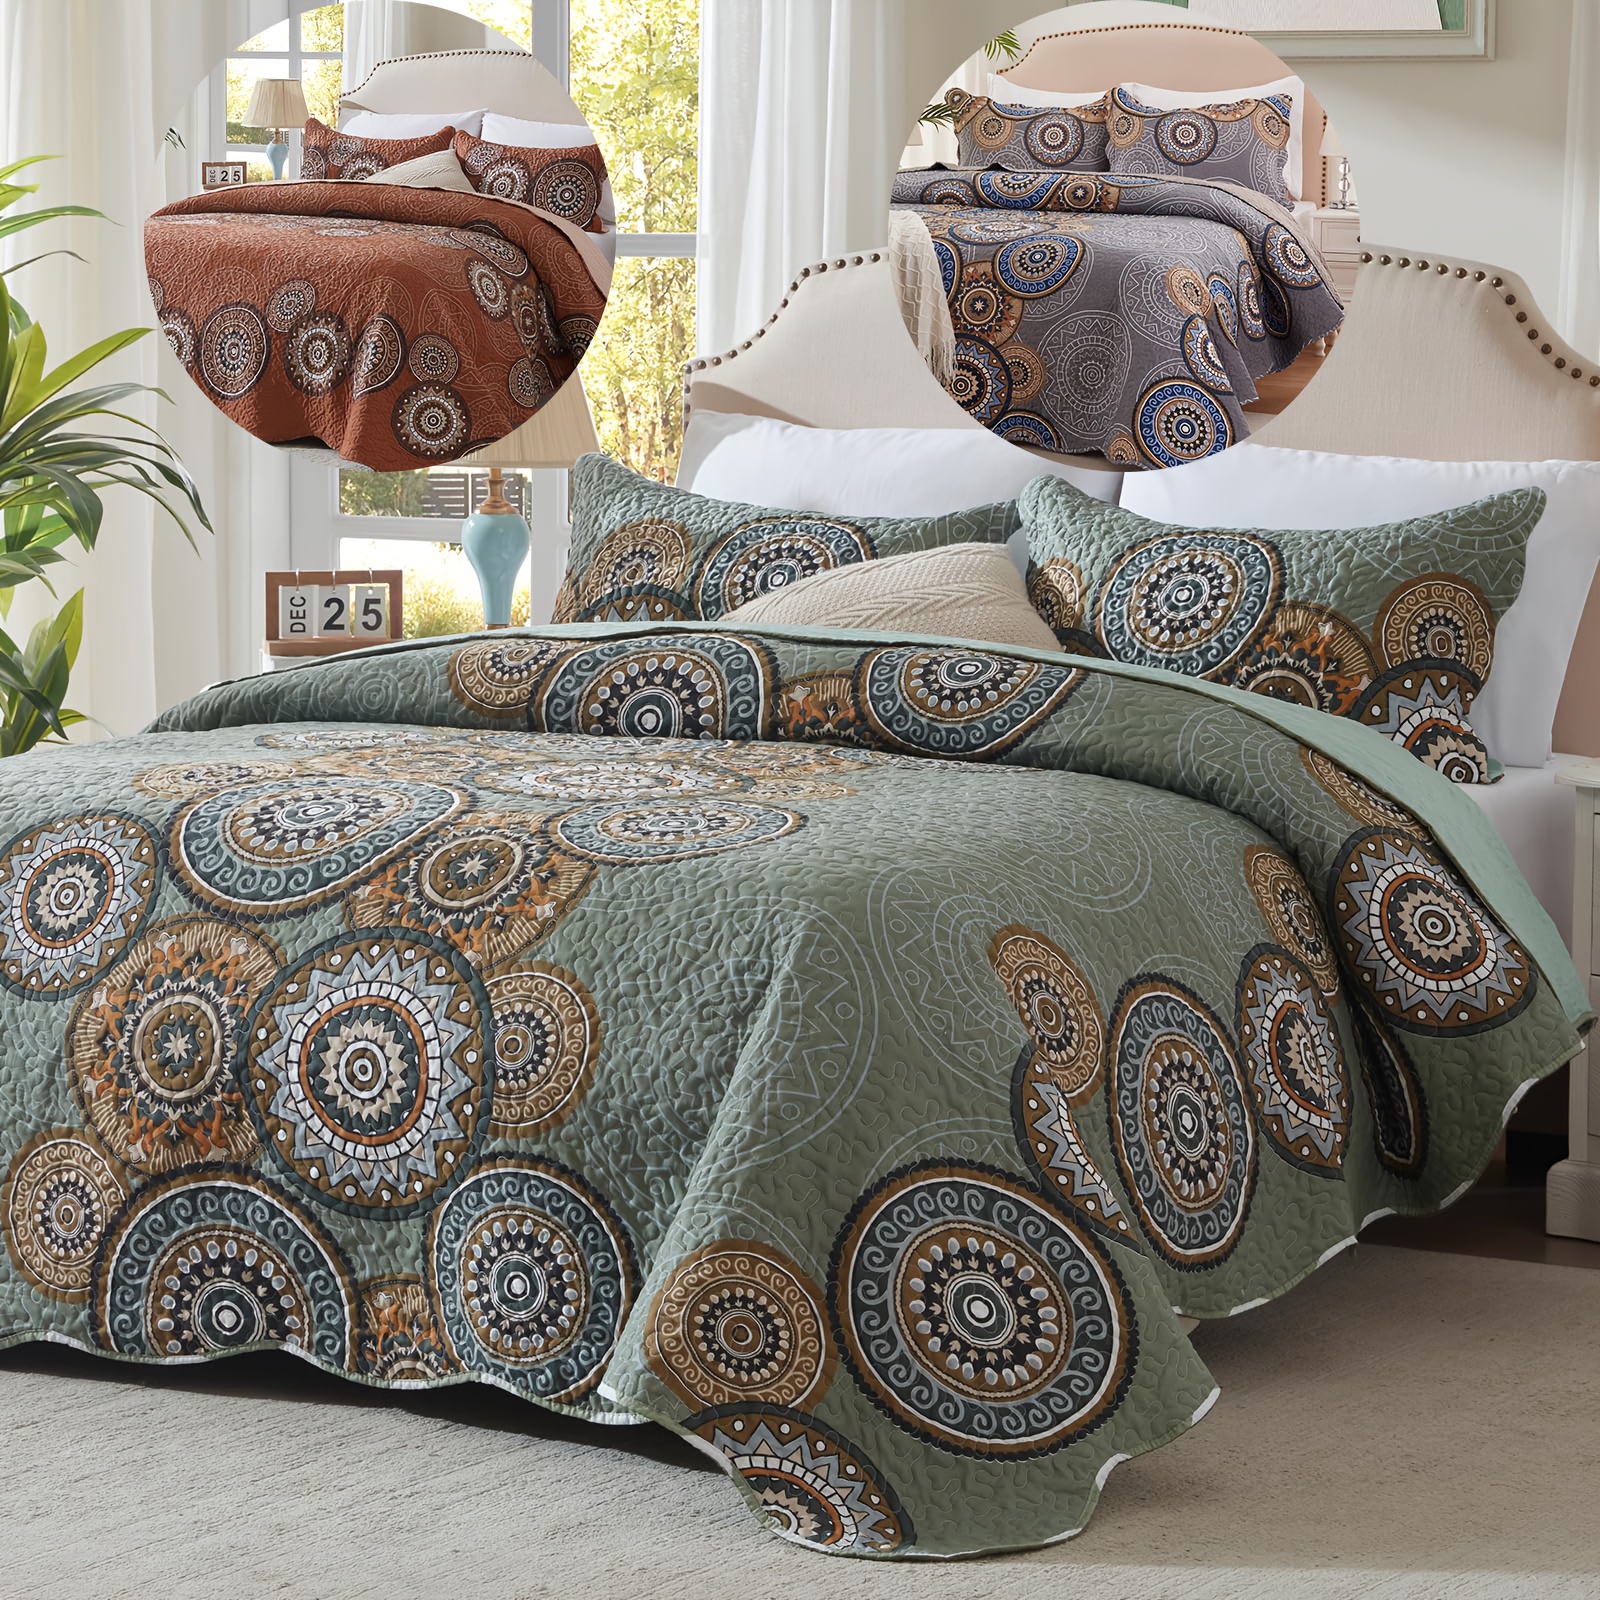 

3 Pcs Lightweight Bohemian Style Bedspread (1 Bedspread, 2 Pillowcase, Without Core), Soft Microfiber Summer Bedspread, Luxurious Warm Mandala Pattern Coverlet Sets For All Seasons